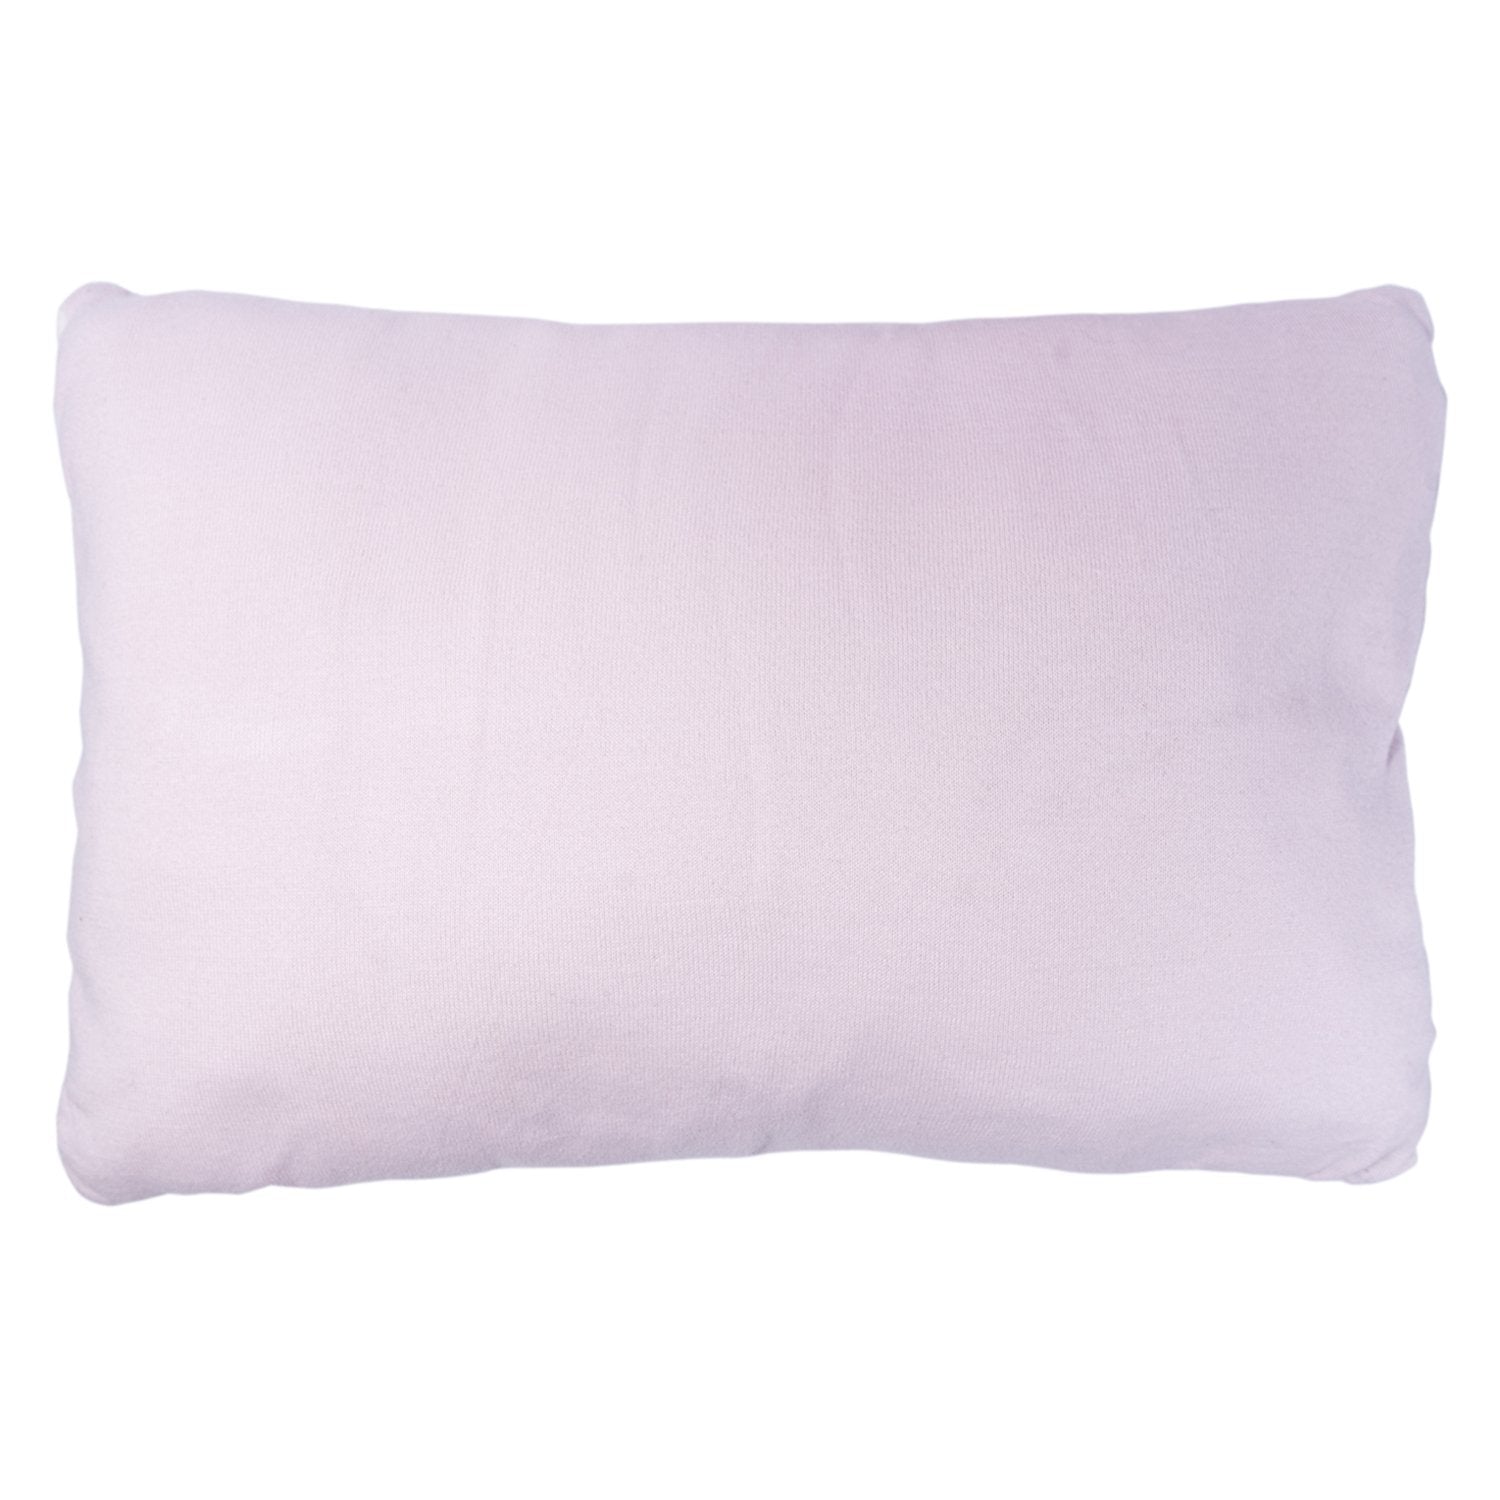 chanel pillow